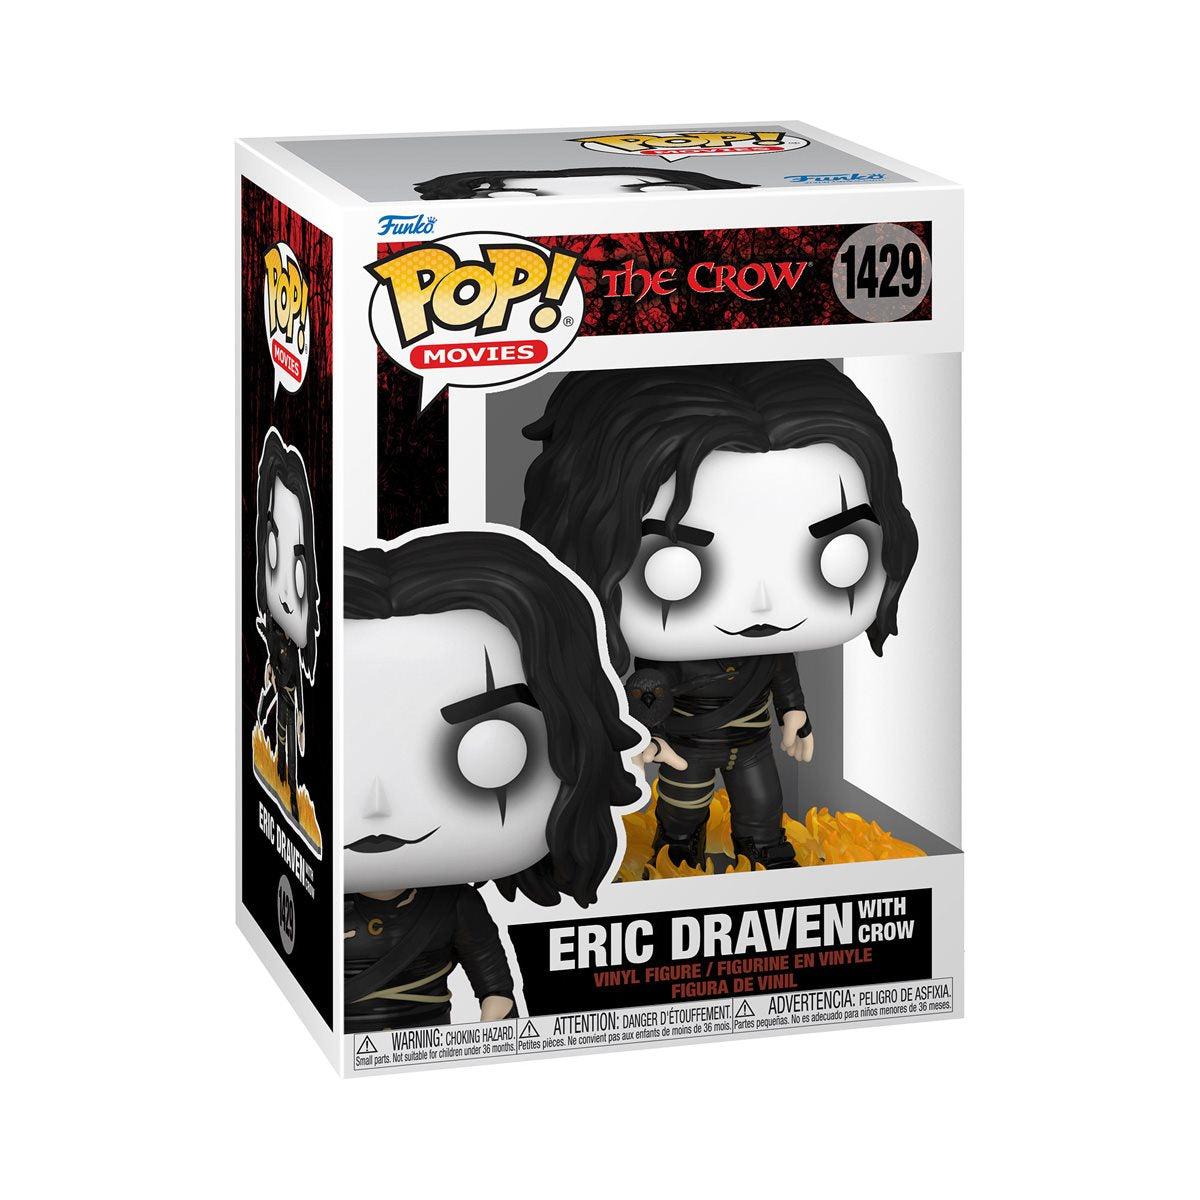 Funko Pop! The Crow - Eric Draven with Crow